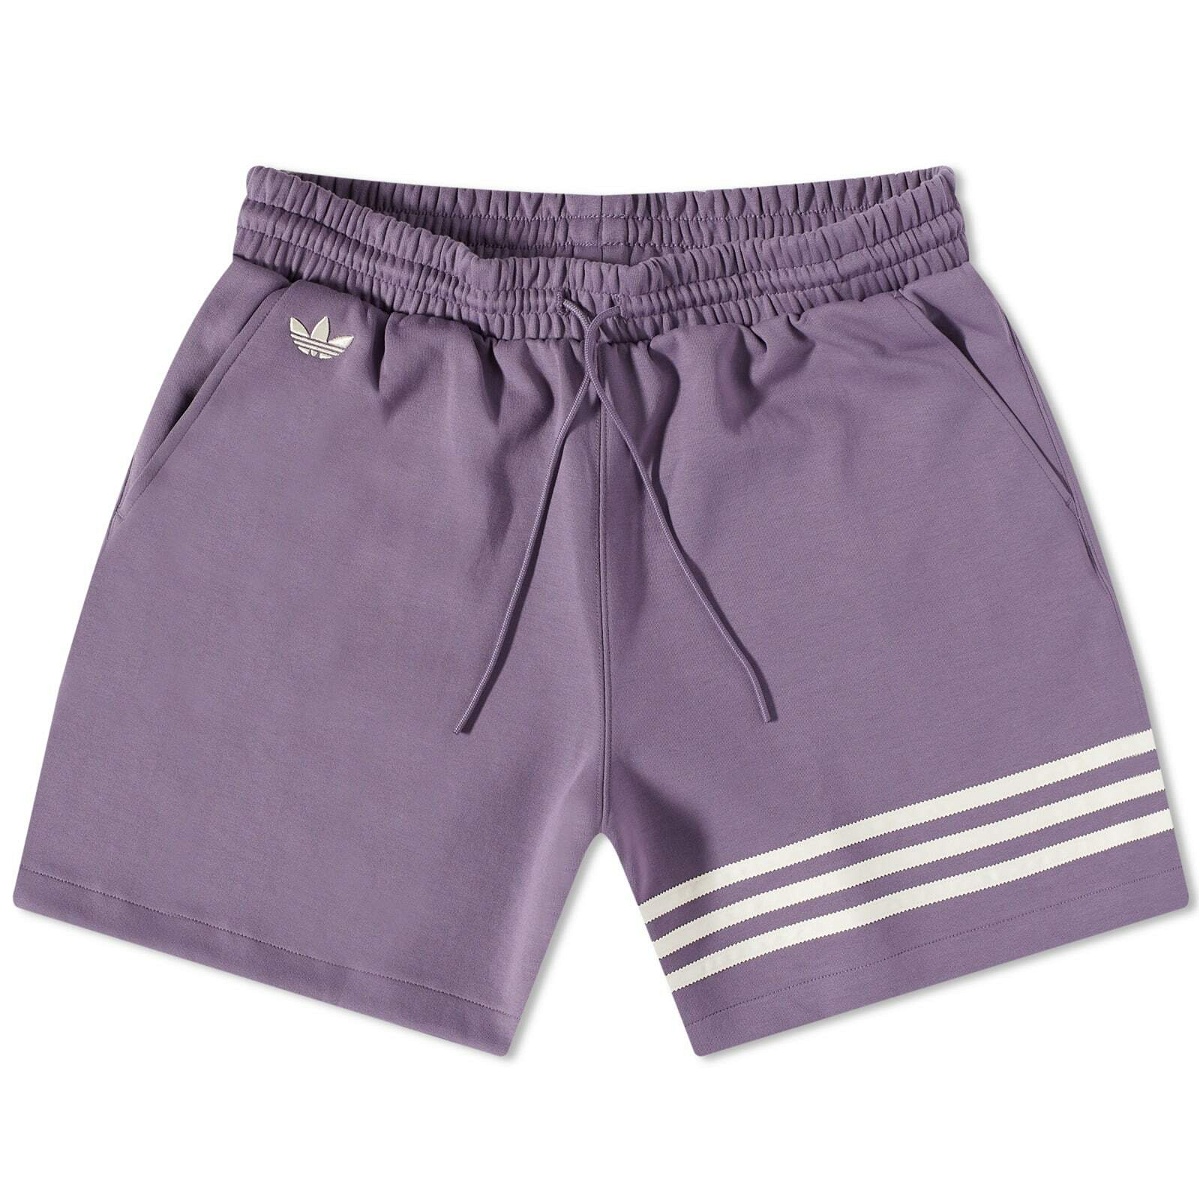 Adidas Men's Neuclassics Short in Shadow Violet adidas